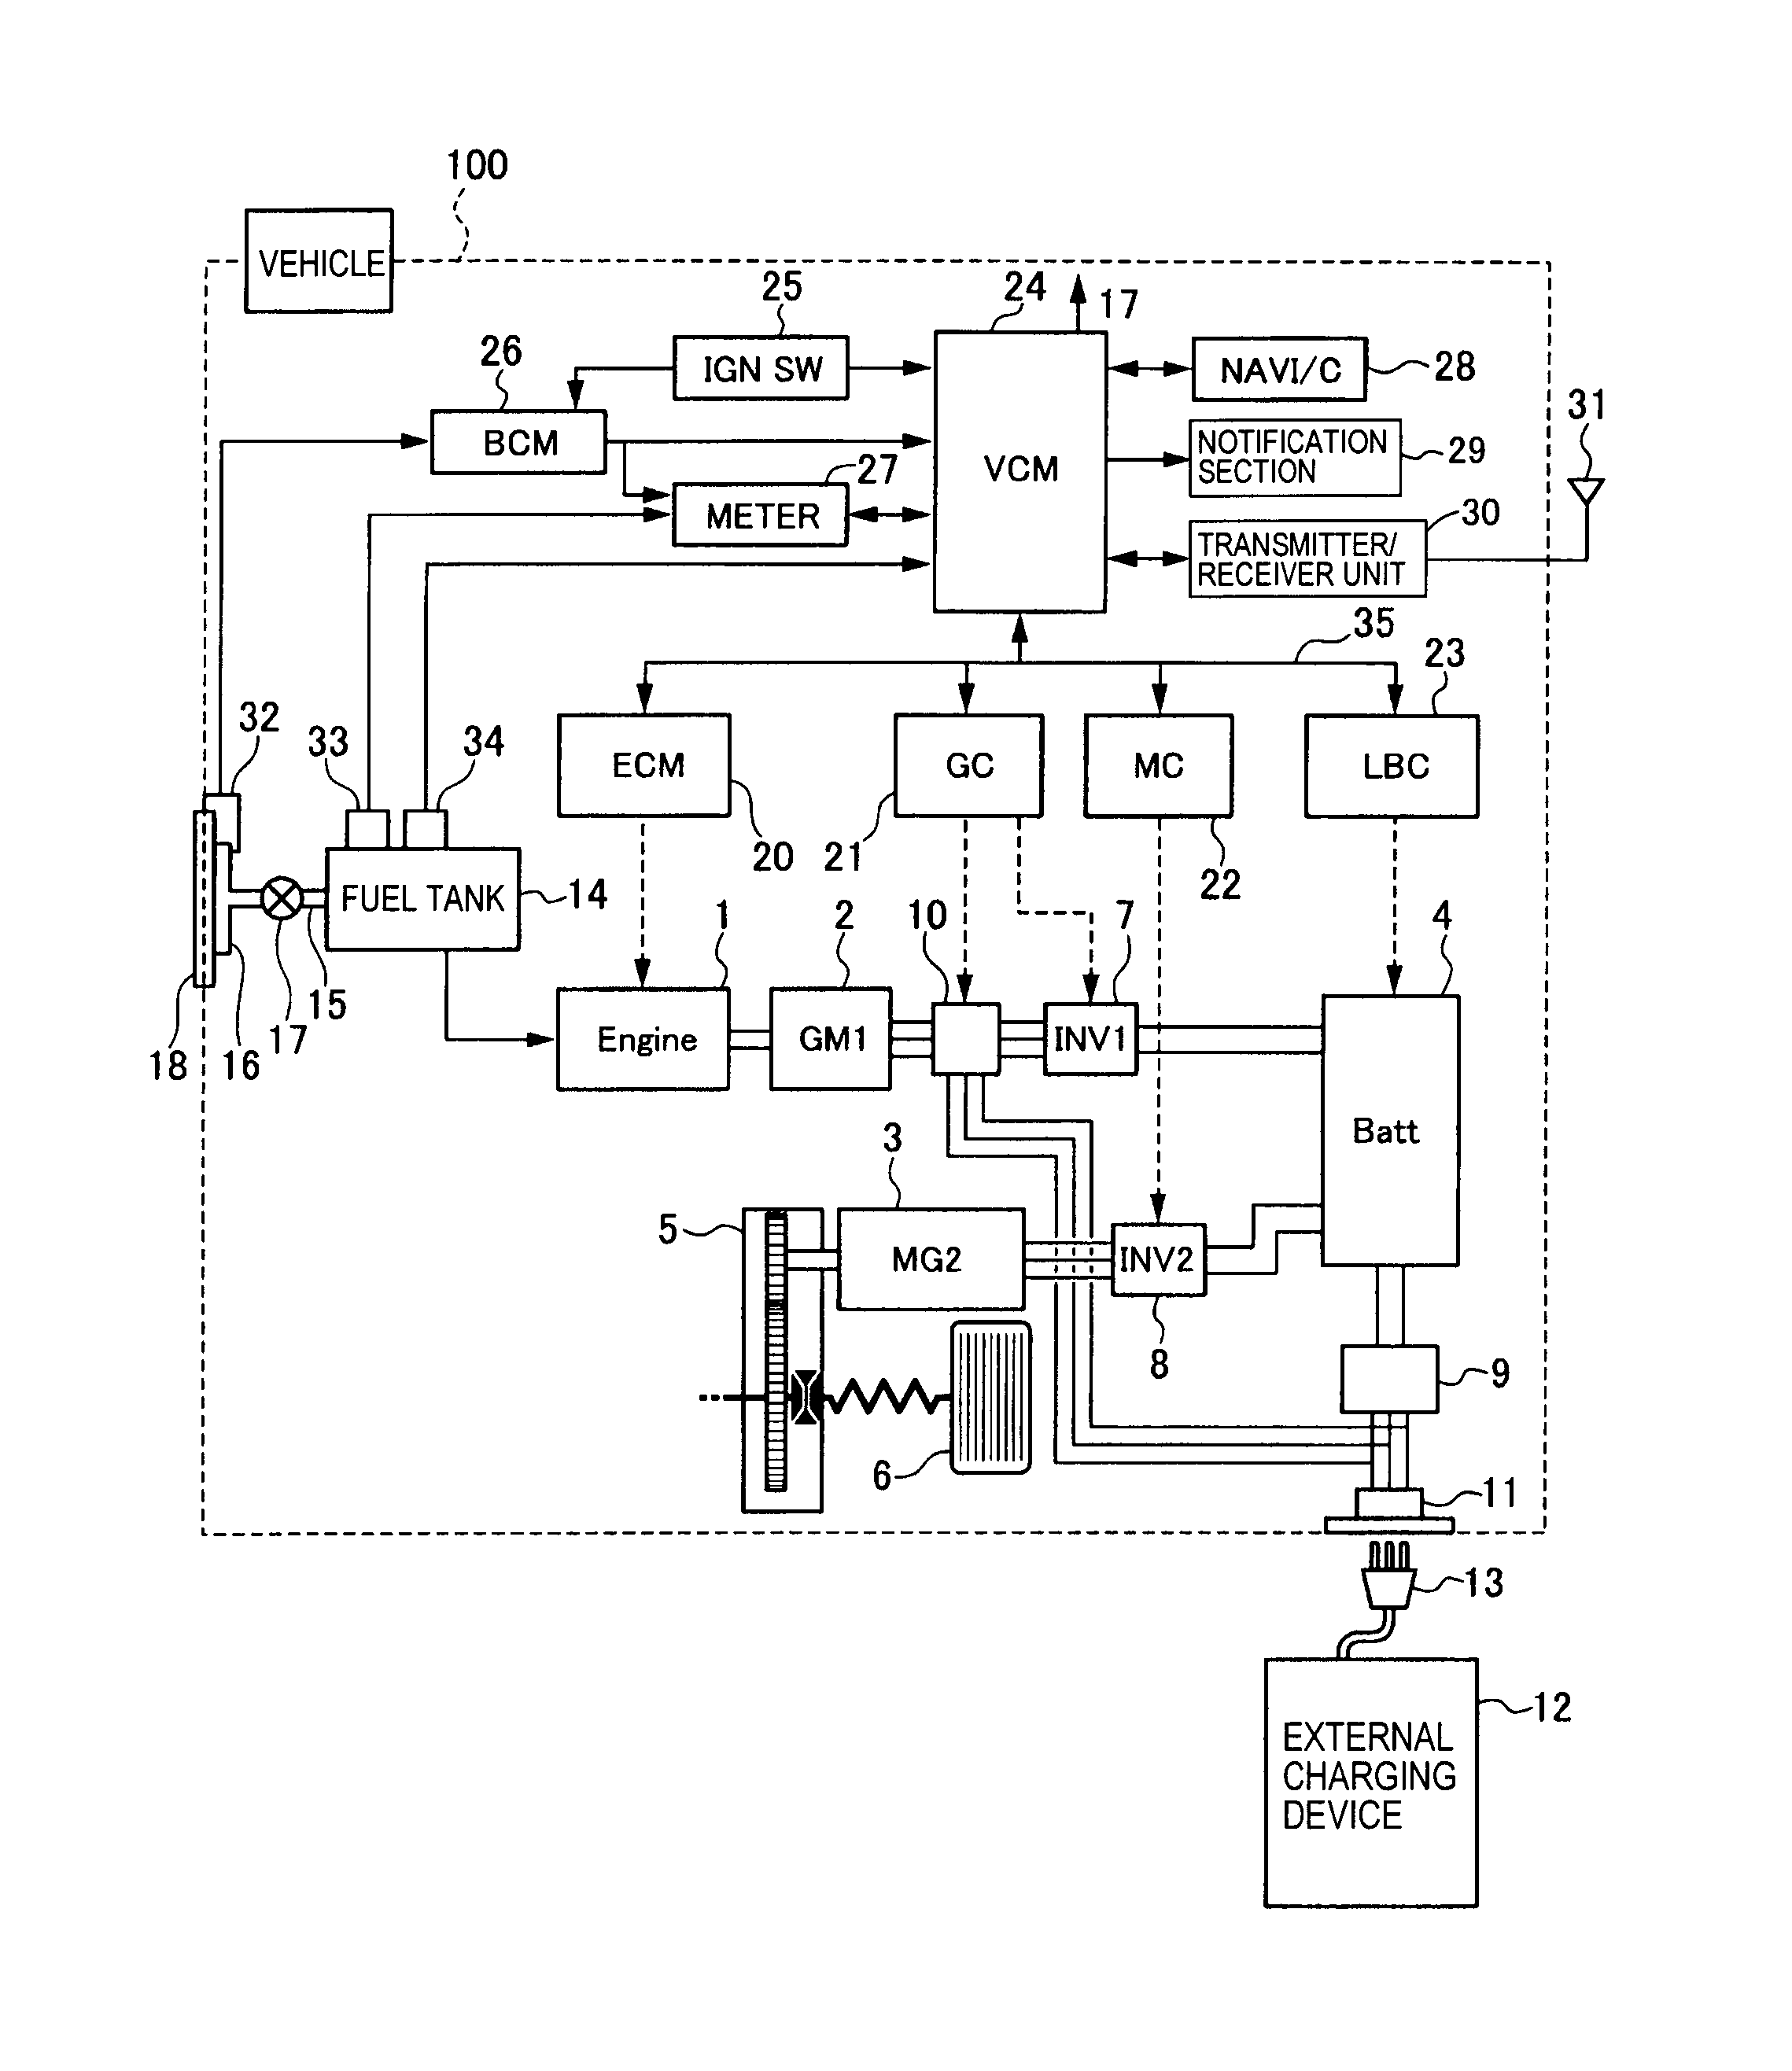 1746 ib32 wiring diagram